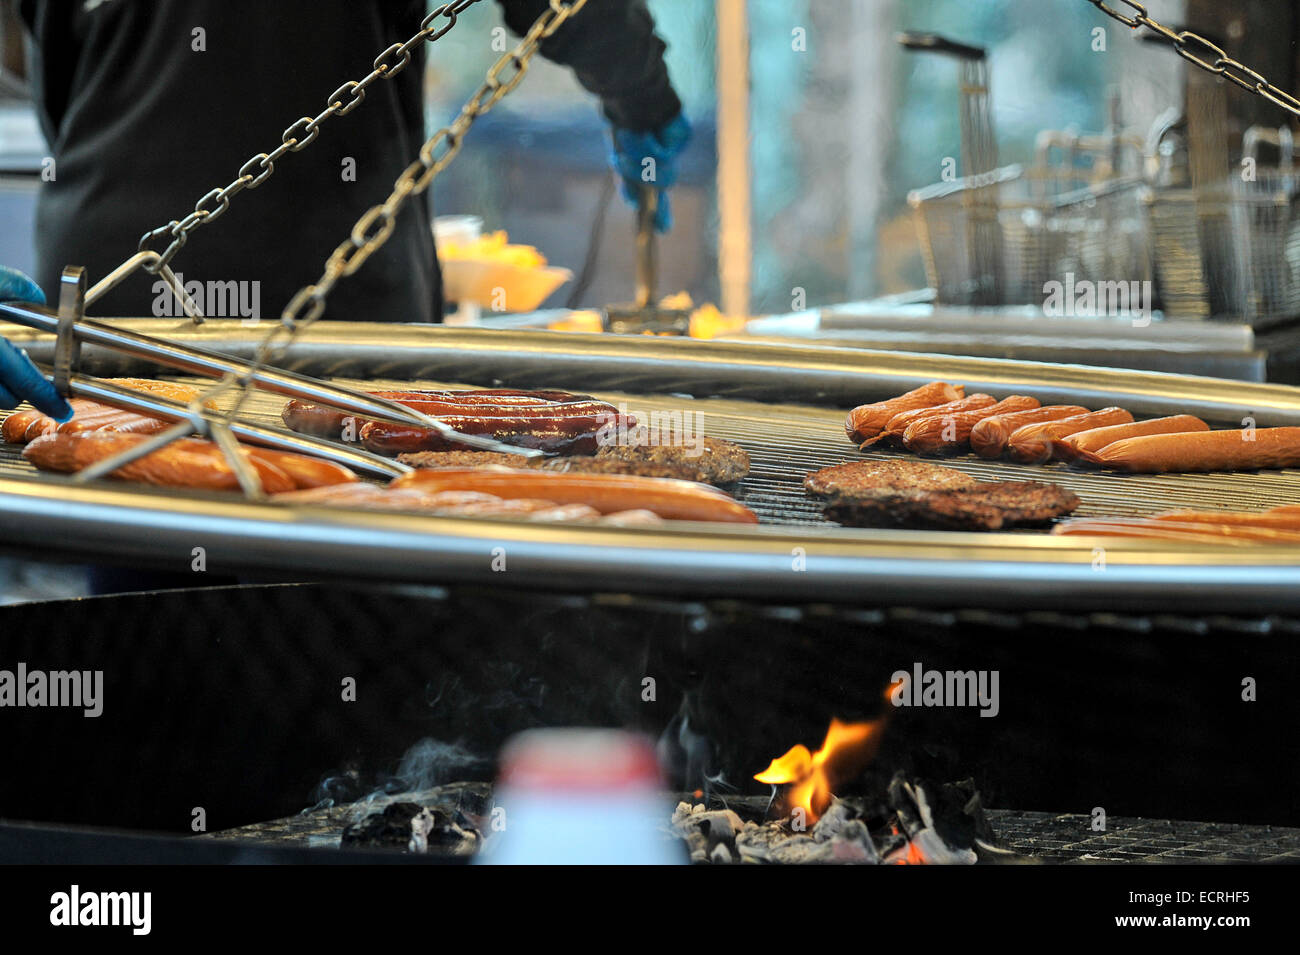 Hot food stall, Christmas market, Londonderry, Northern Ireland.  Photo © George Sweeney/Alamy Stock Photo